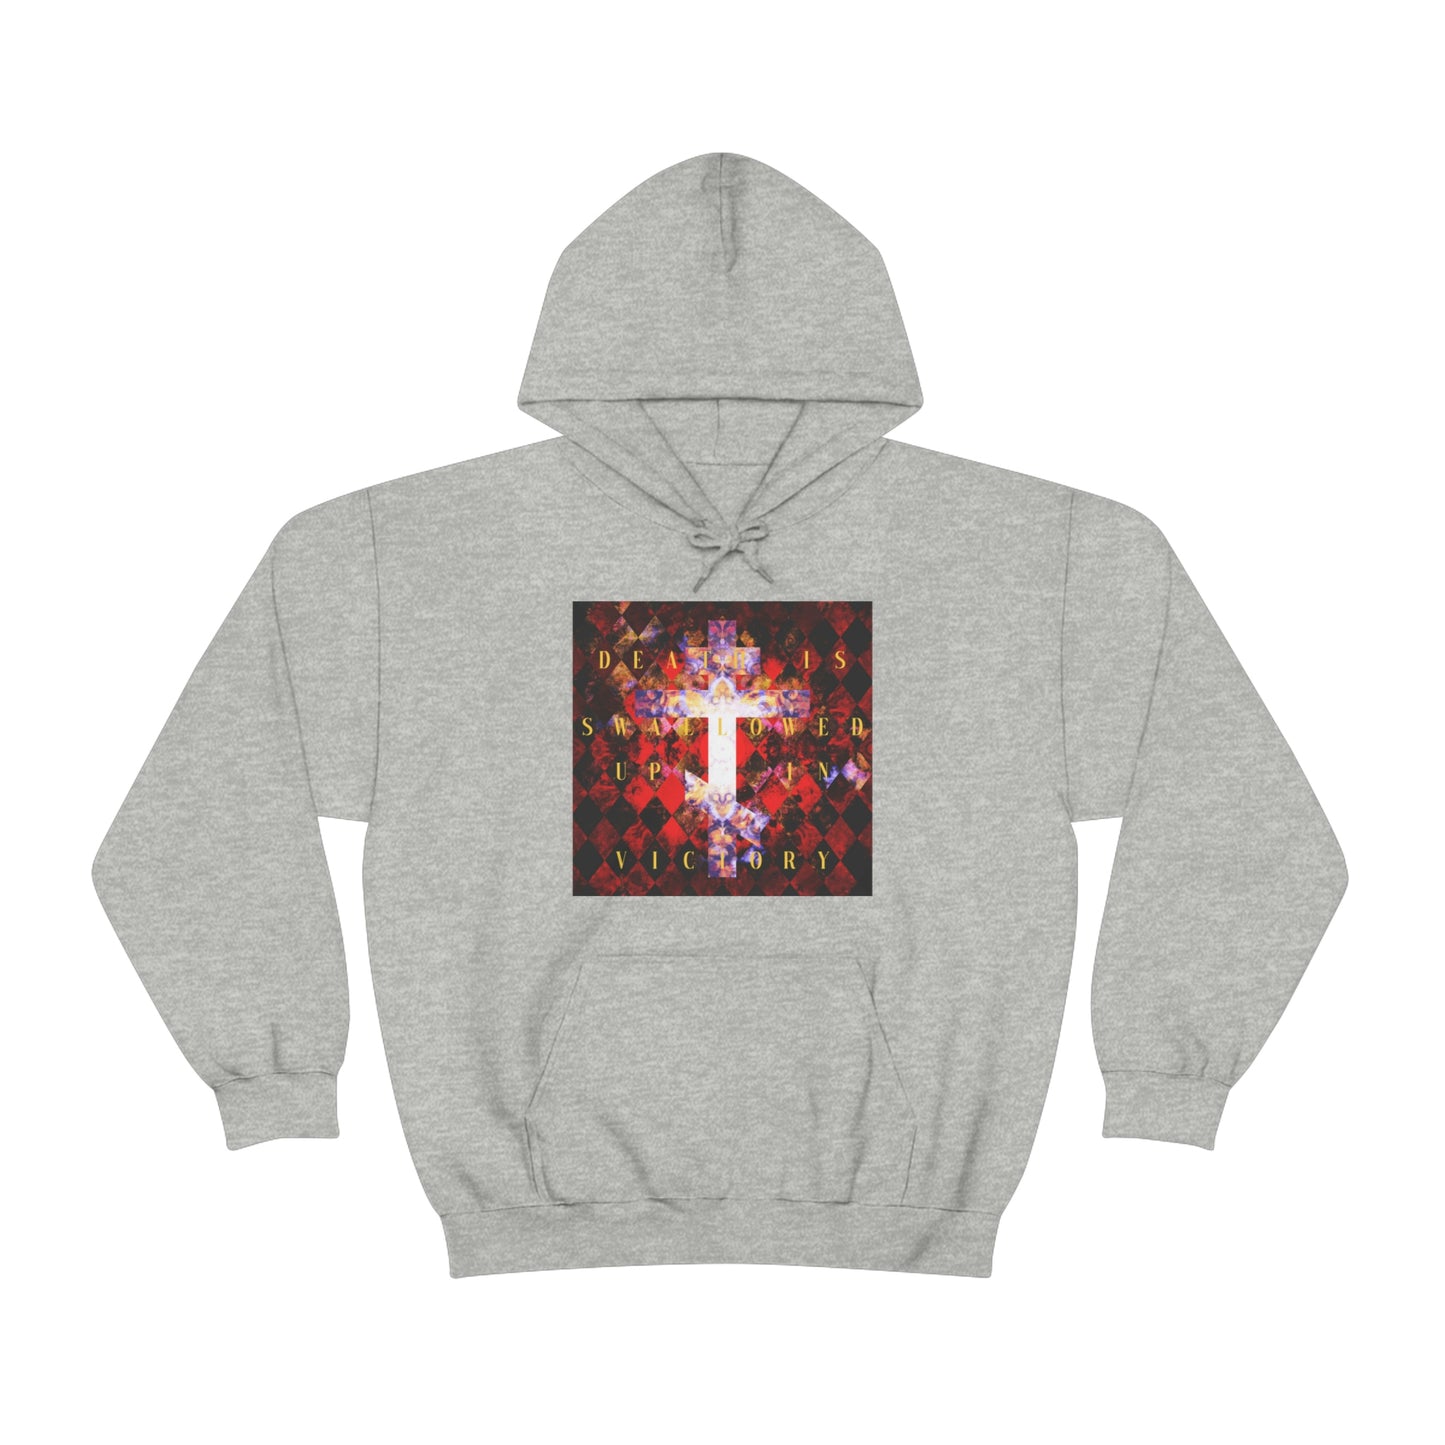 Death is Swallowed Up In Victory No. 1 | Orthodox Christian Hoodie / Hooded Sweatshirt